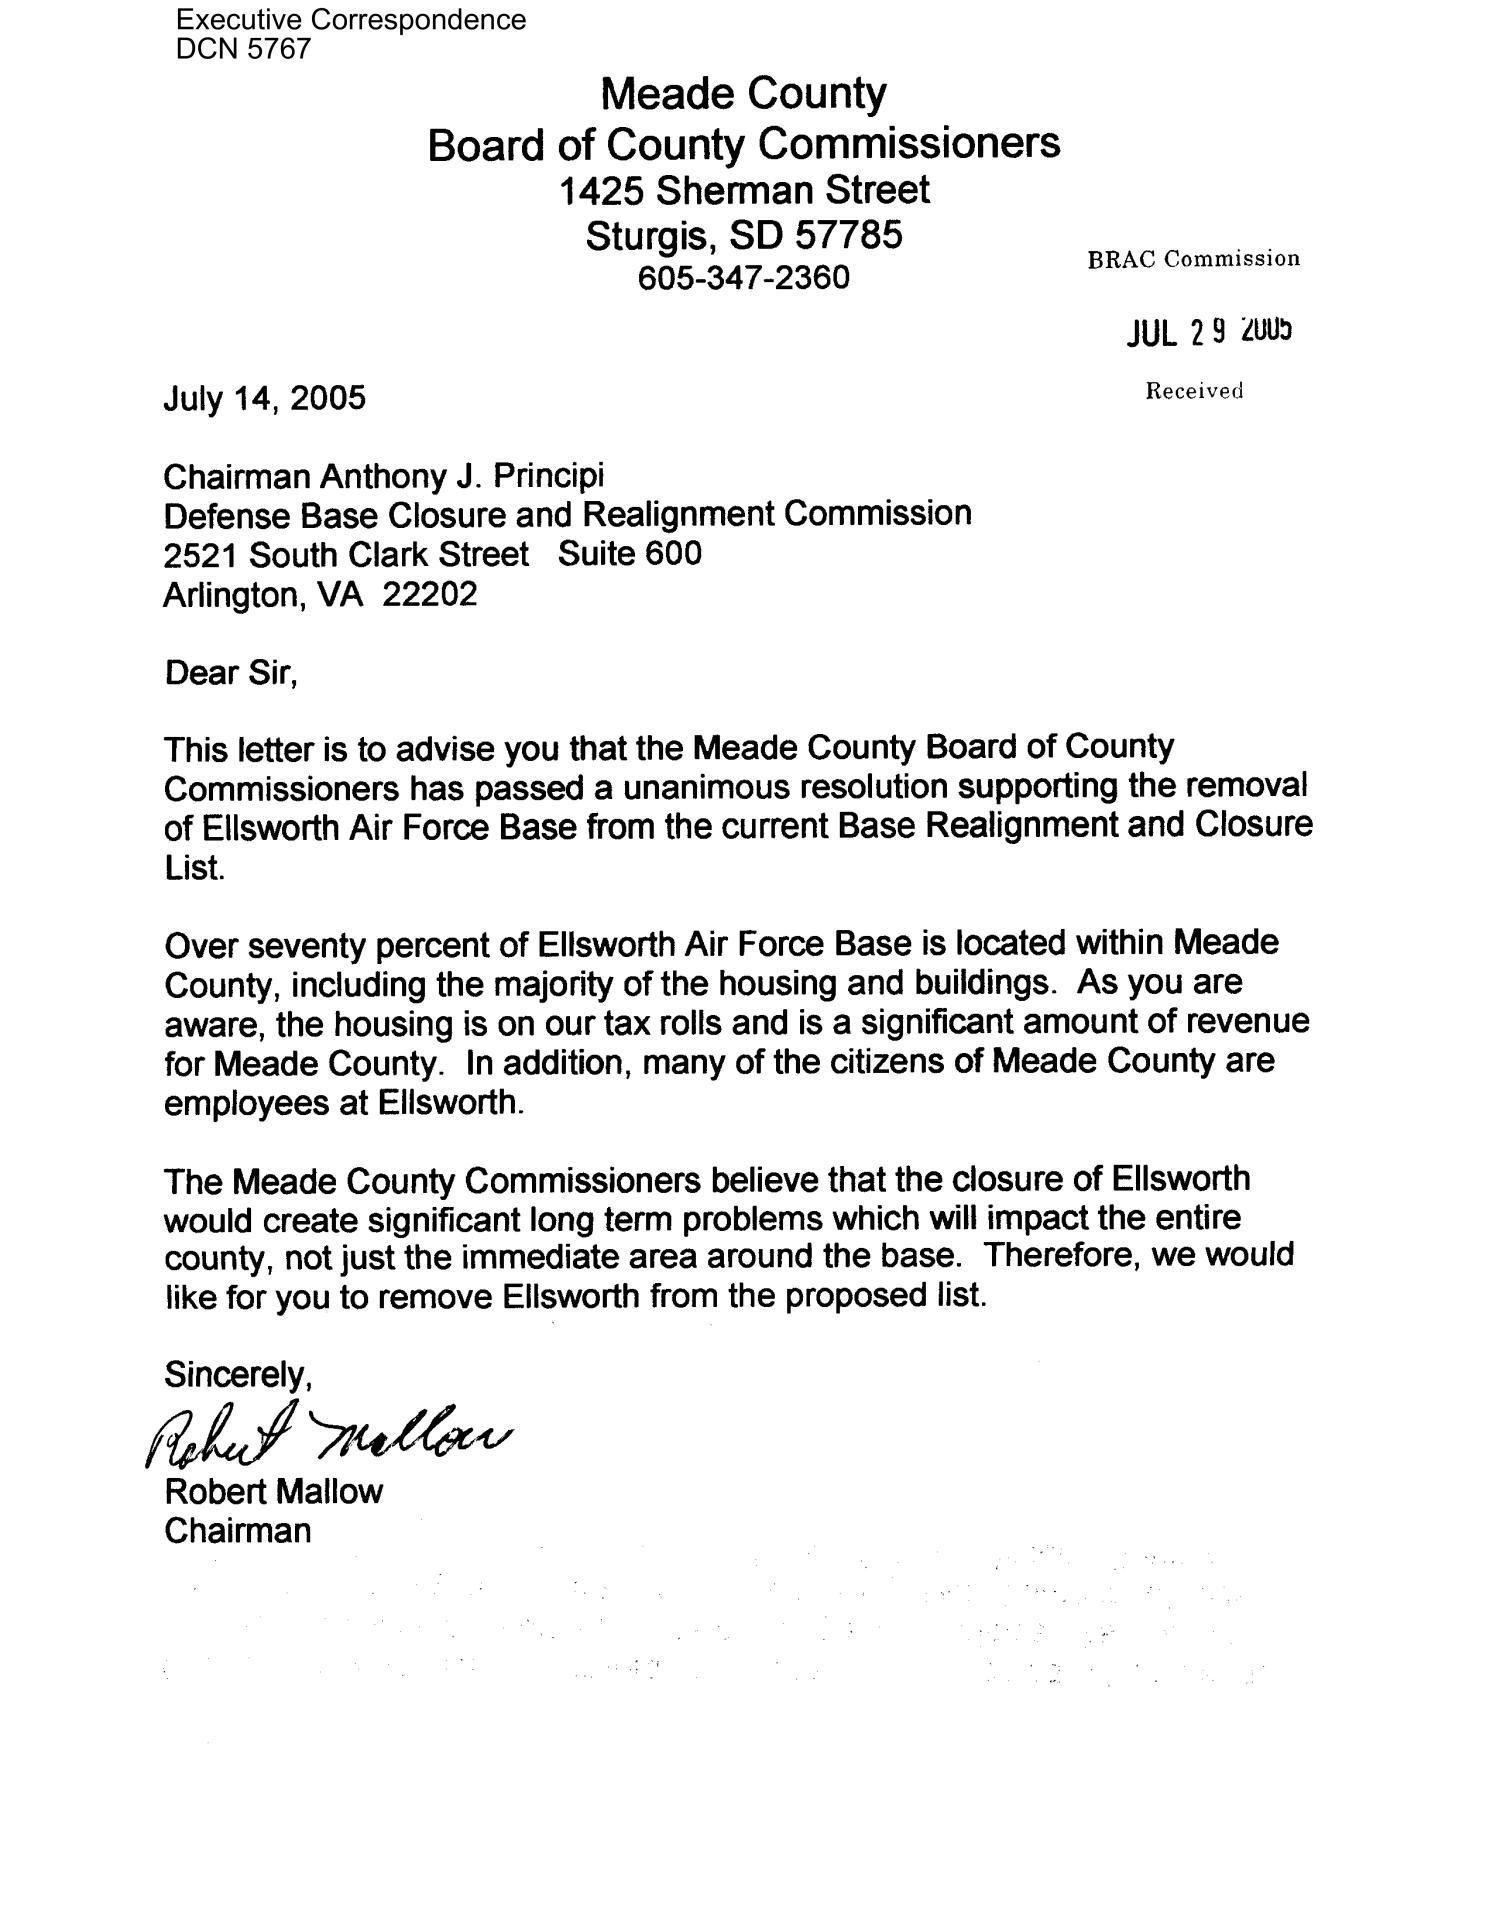 Executive Correspondence – Letter dtd 07/14/2005 to Chairman Principi